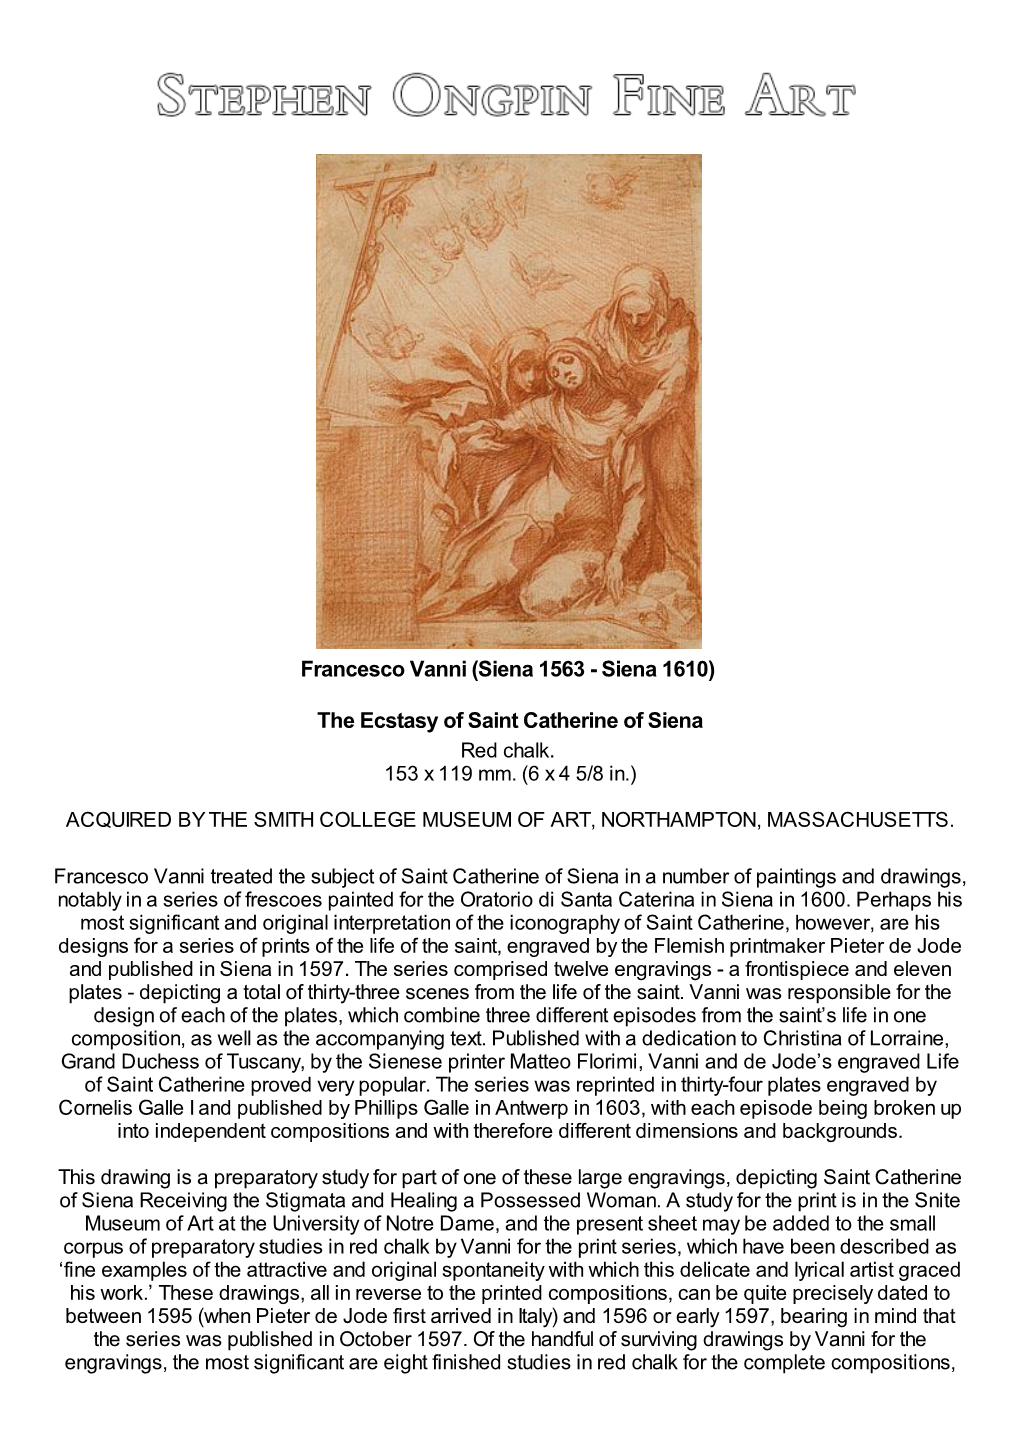 The Ecstasy of Saint Catherine of Siena Red Chalk